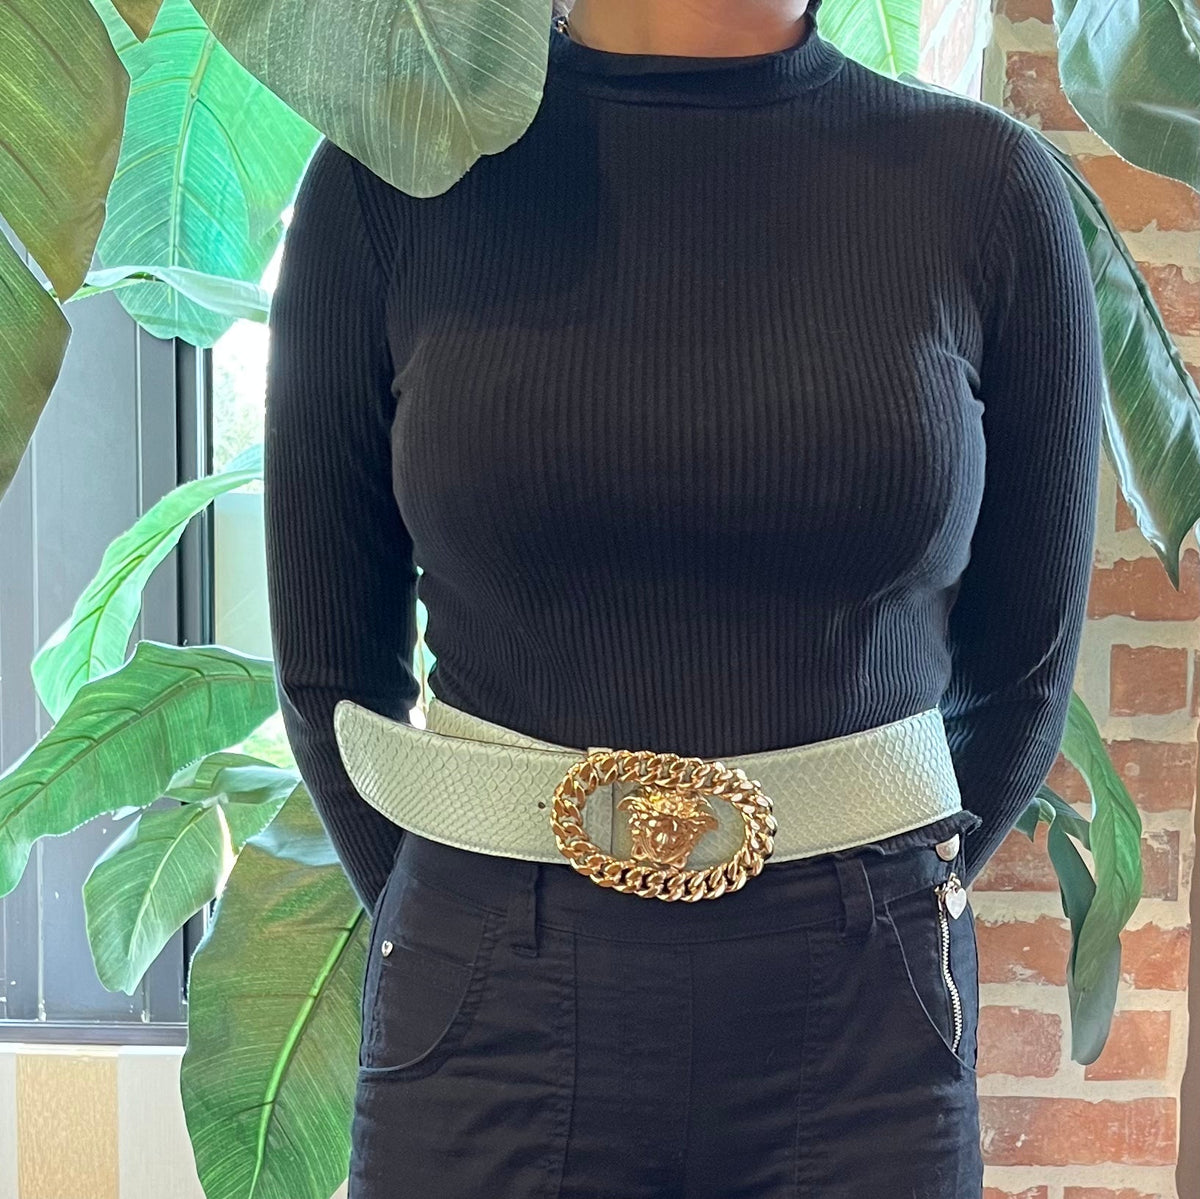 NEW Versace Women's Black Leather Large Silver Tone MEDUSA Buckle Belt 32 80